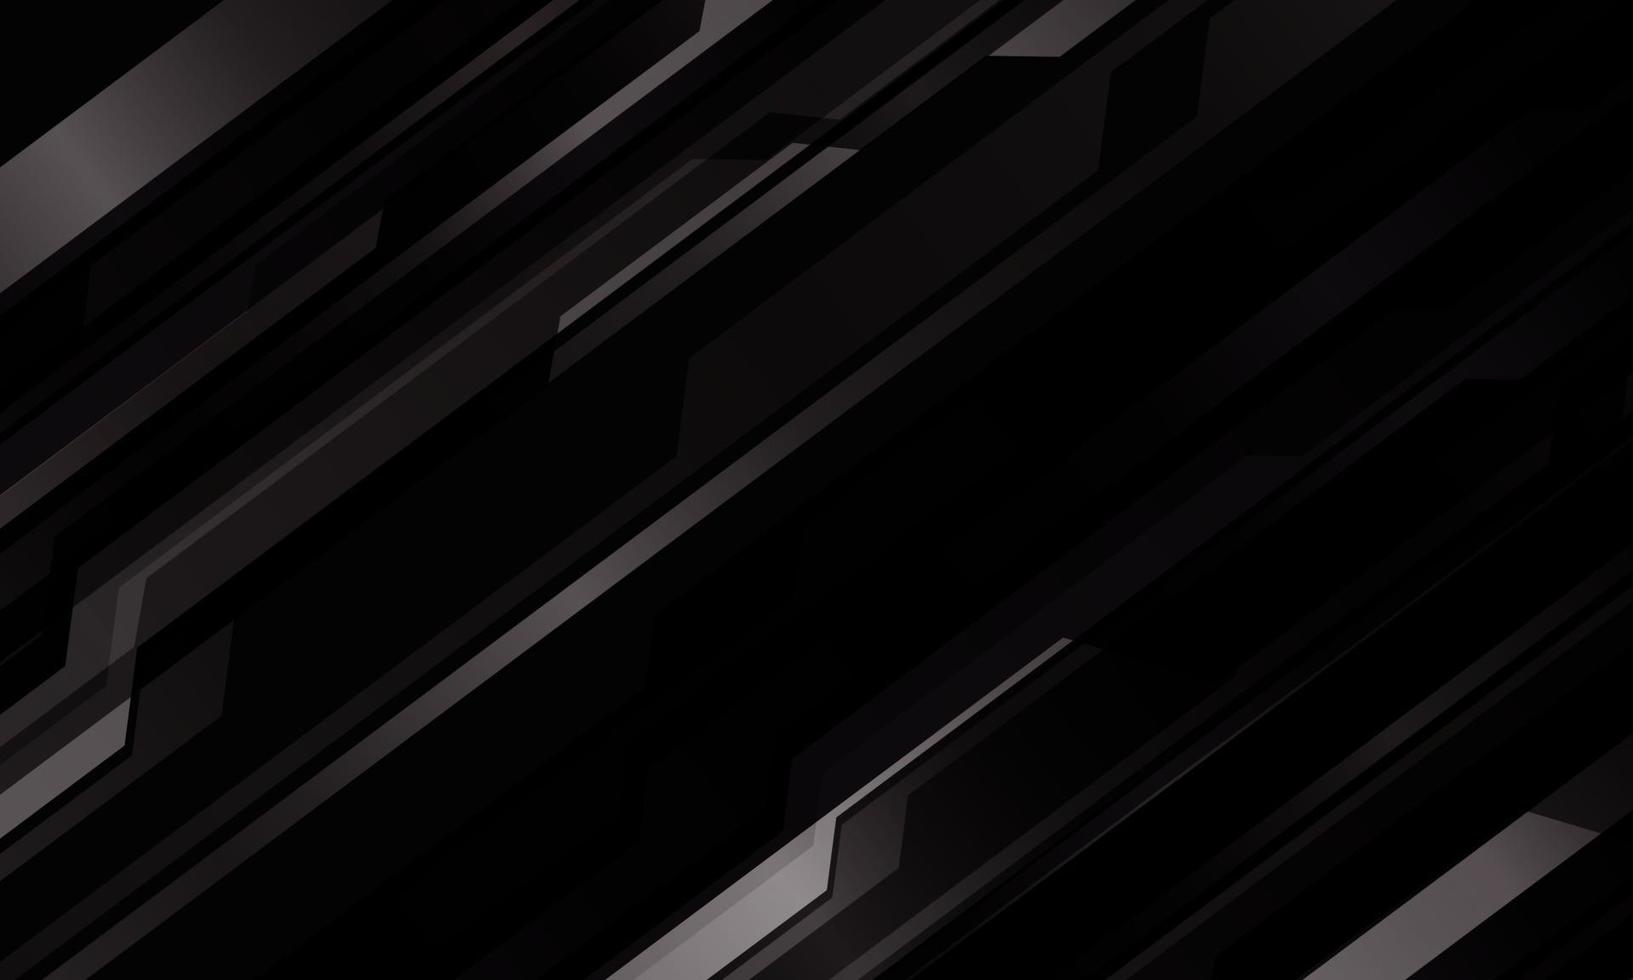 Patrón cibernético metálico gris oscuro abstracto en ilustración de vector de fondo futurista de tecnología moderna de diseño negro.